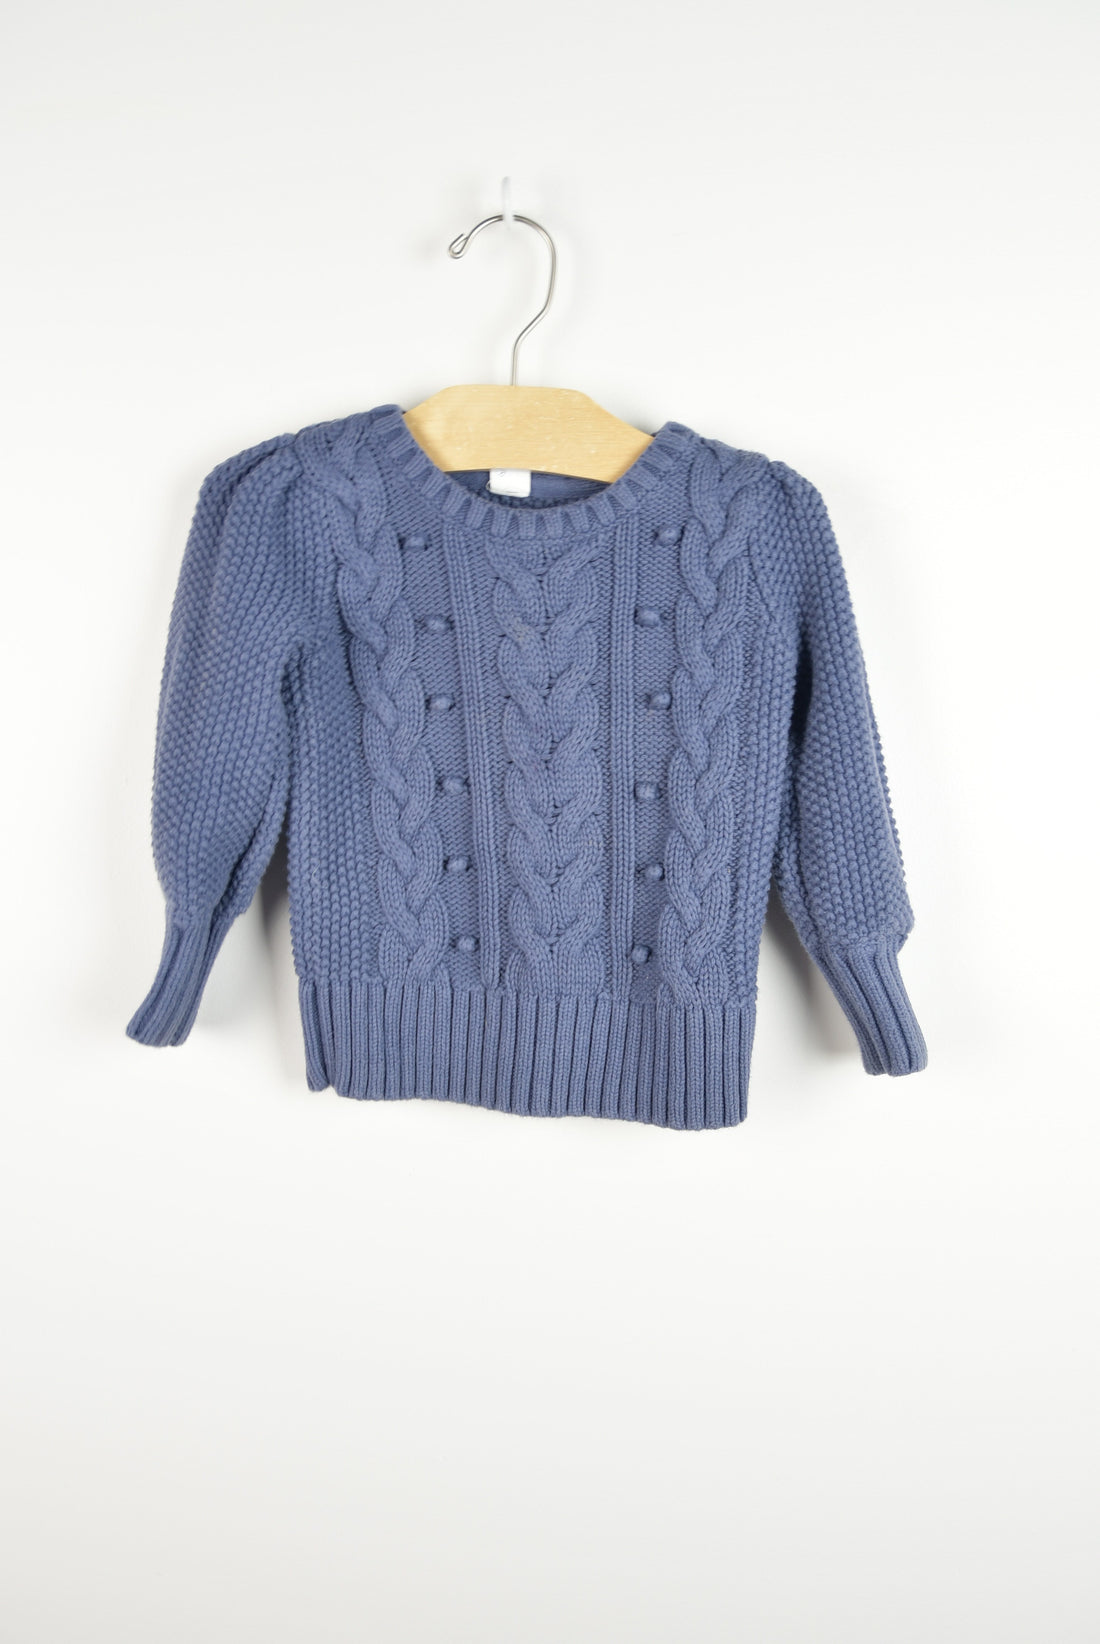 Gap Knit Sweater (3T)